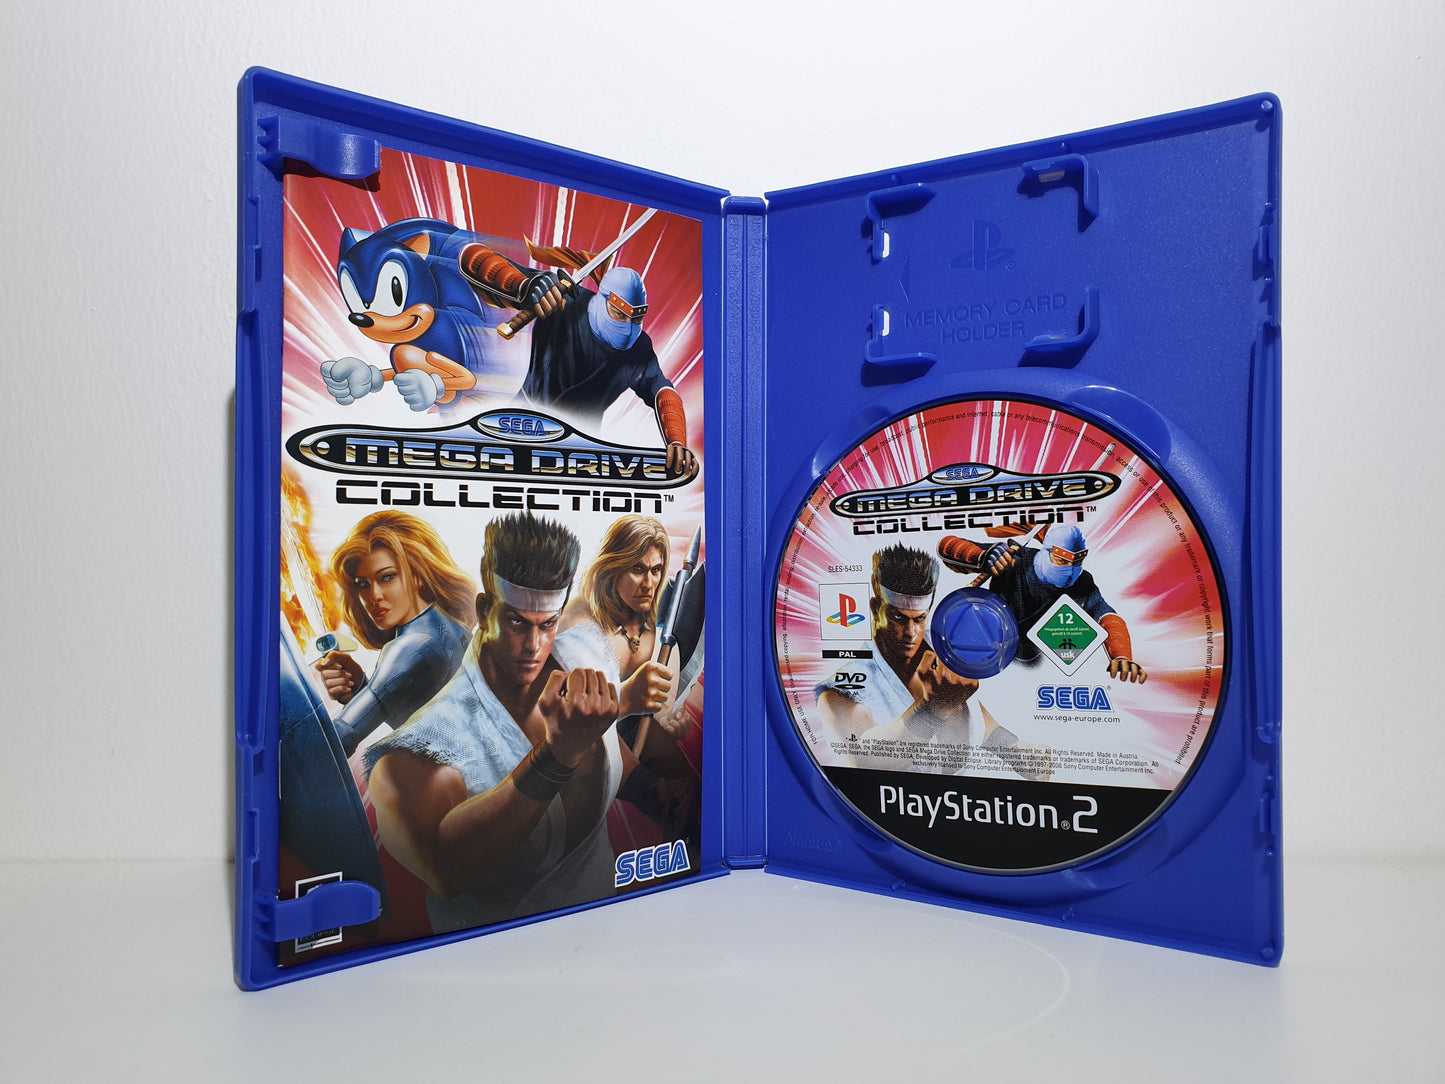 Sega Mega Drive Collection PS2 - Occasion excellent état